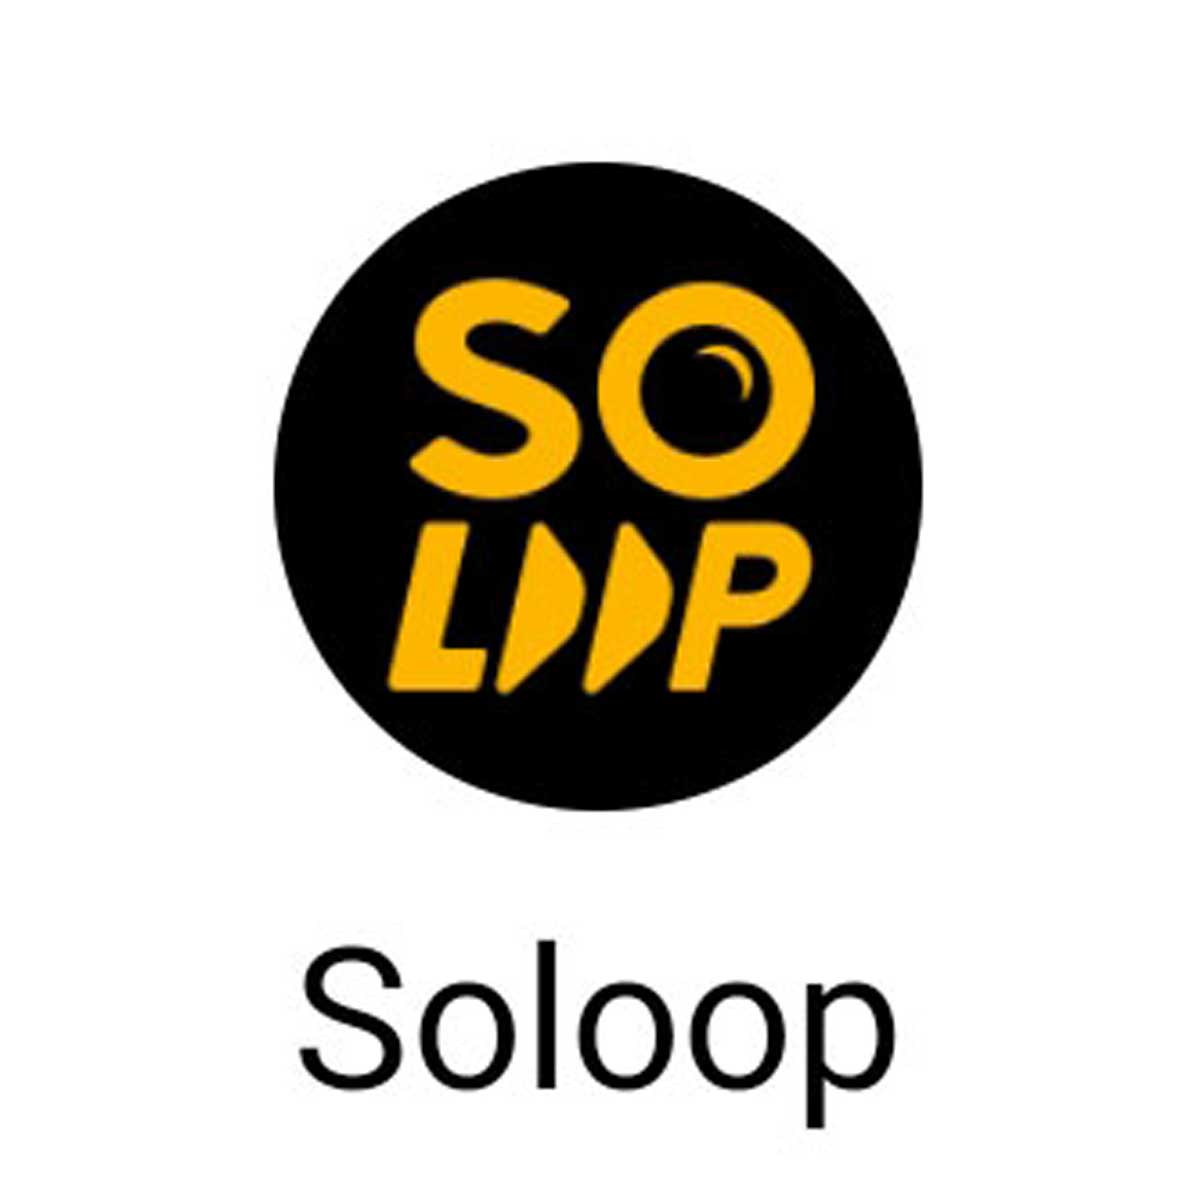 soloop video editor apk 1.16.0 latest version download